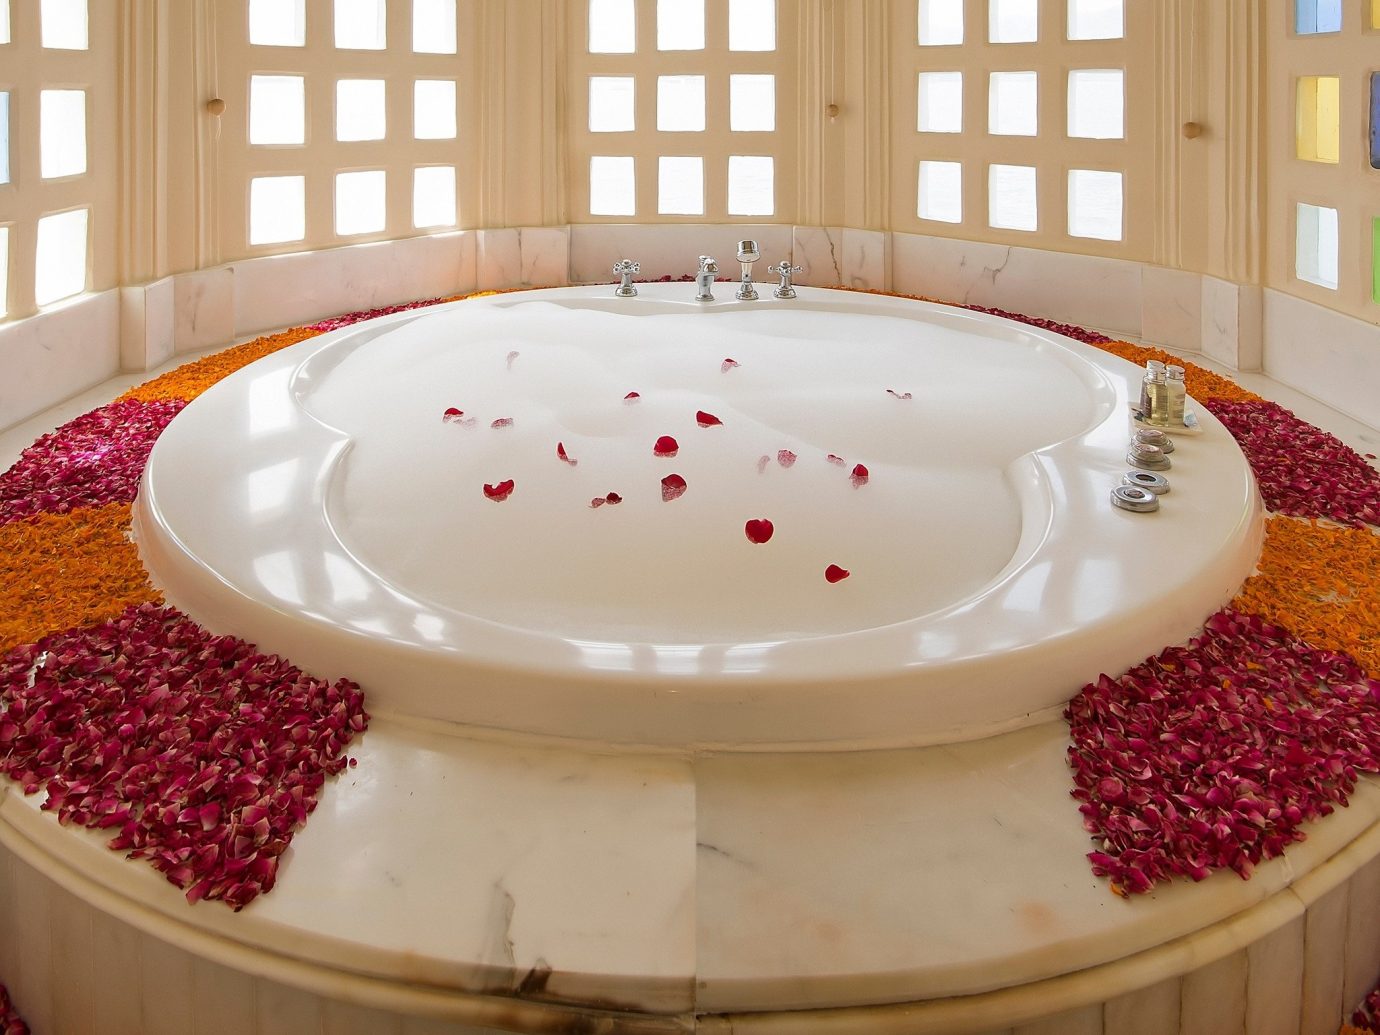 Hotels Luxury Travel plate table window indoor bathtub ceramic white plumbing fixture decorated jacuzzi amenity flooring plant fresh